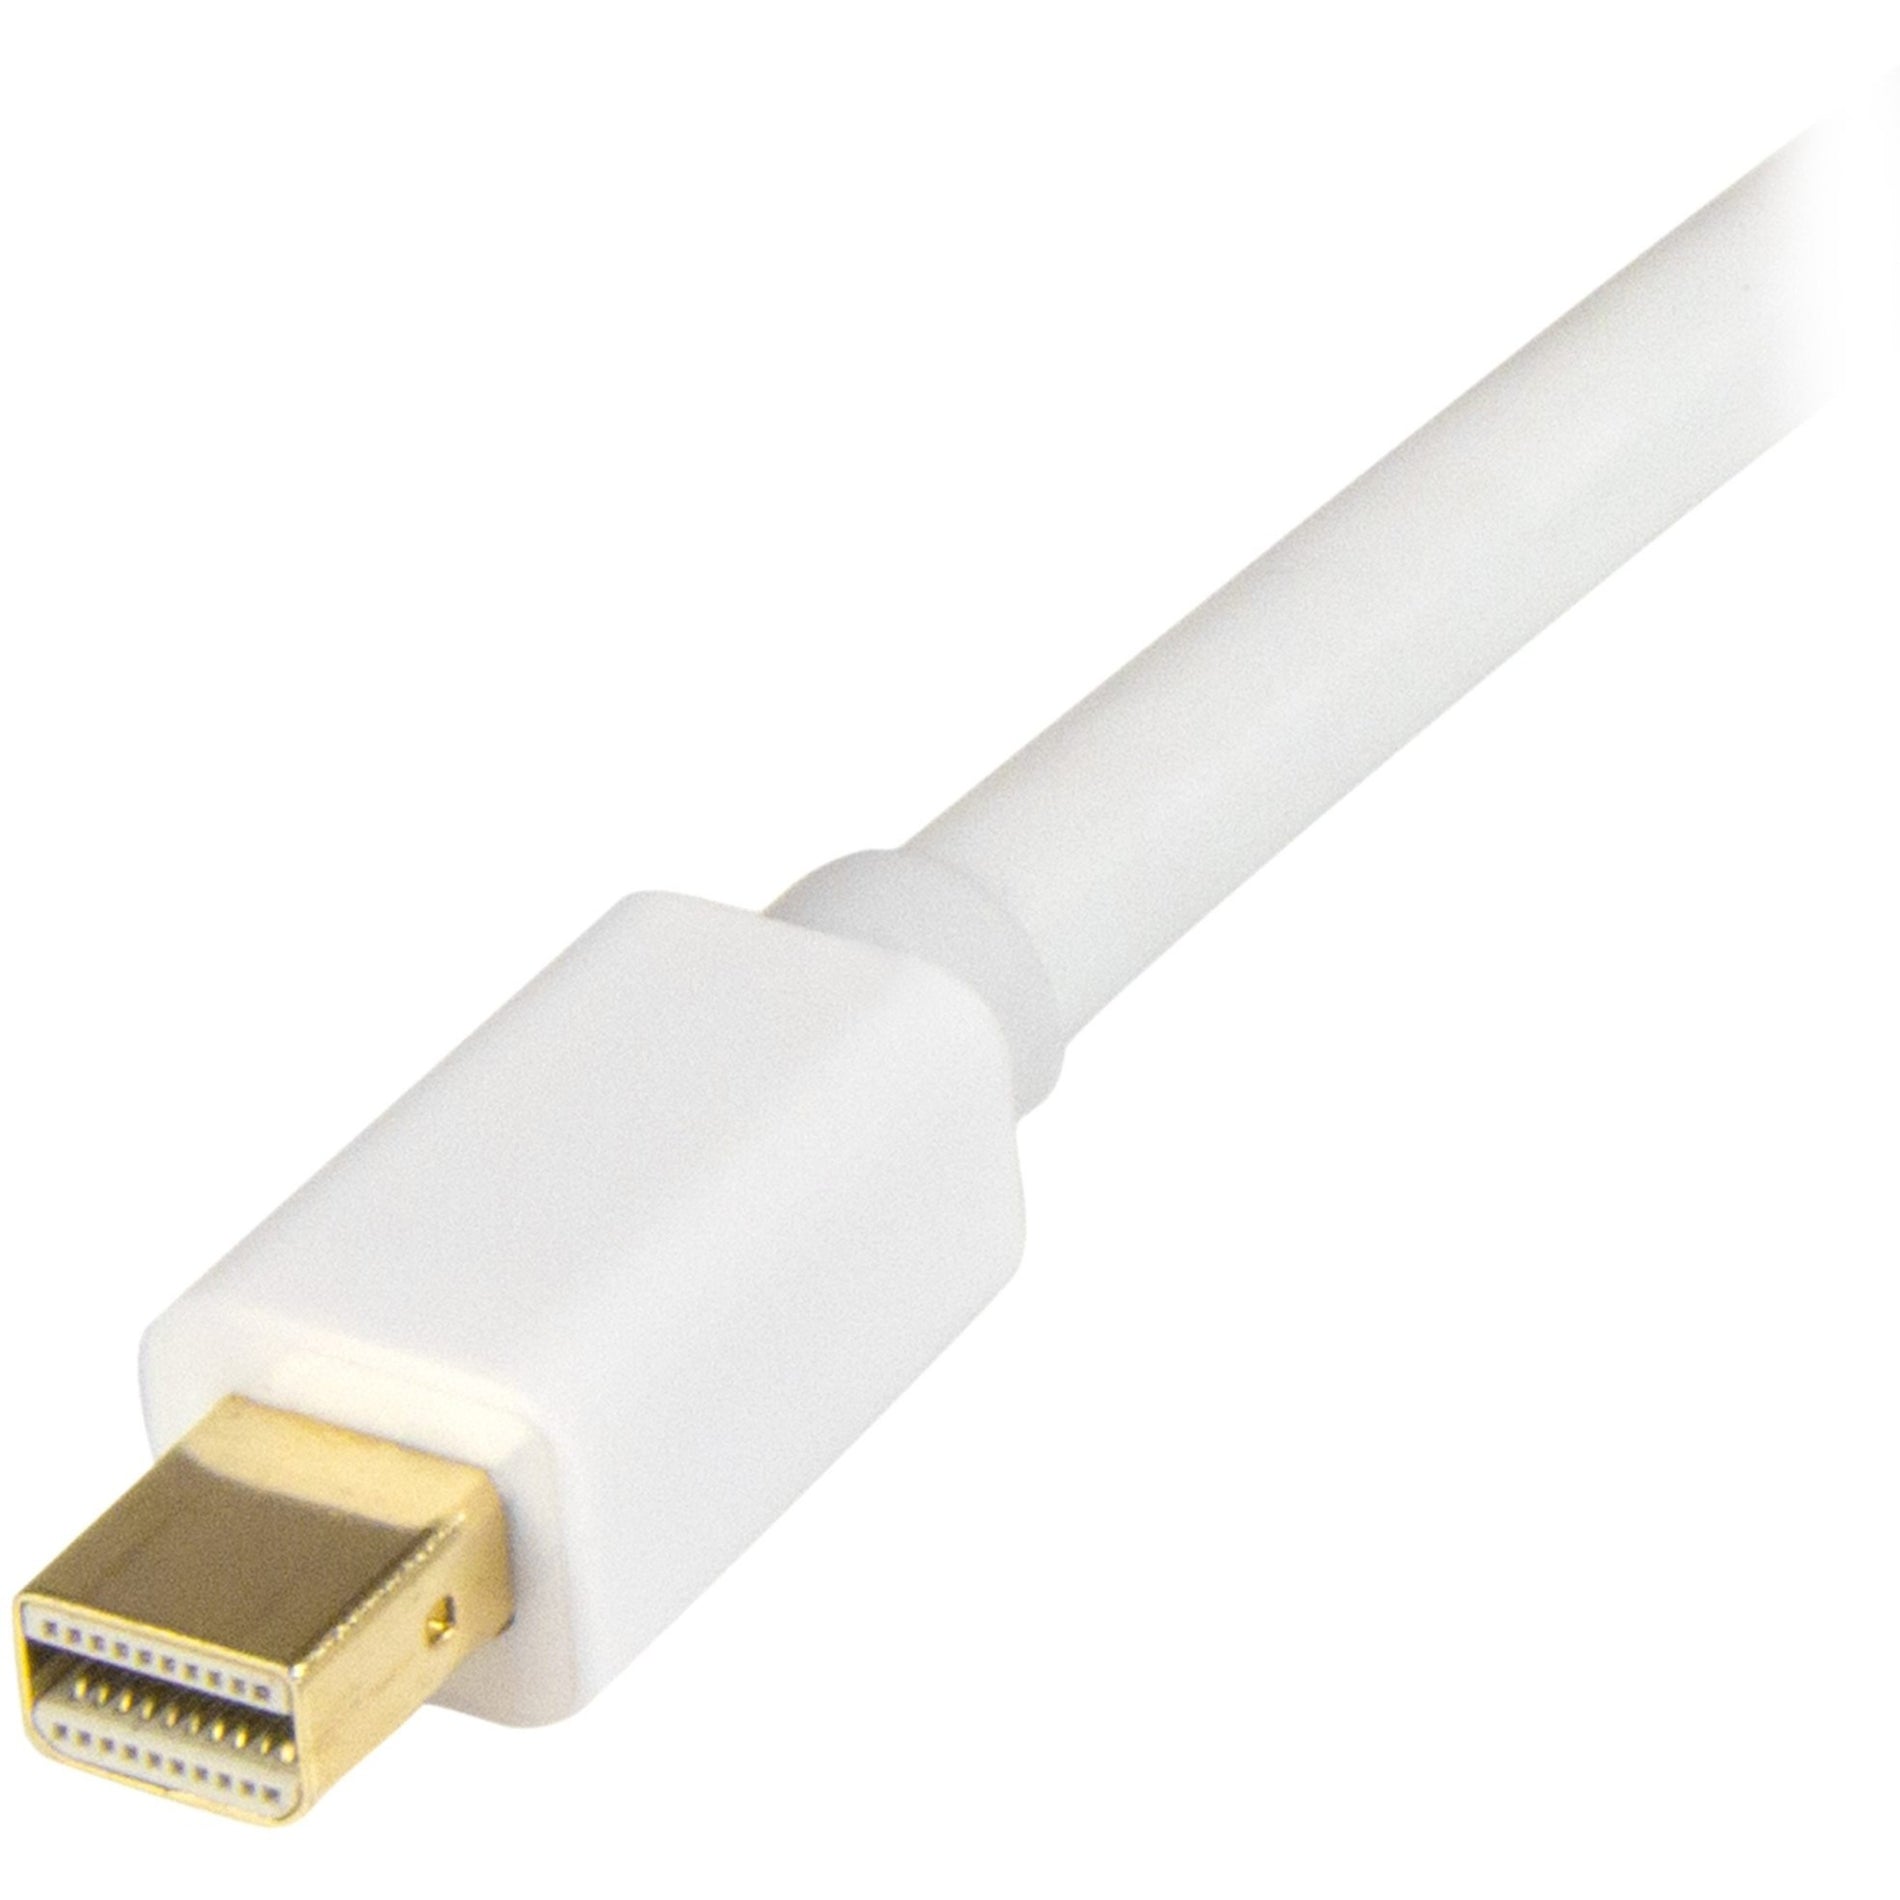 Mini DisplayPort to HDMI Converter Cable - 4K - White [Discontinued]